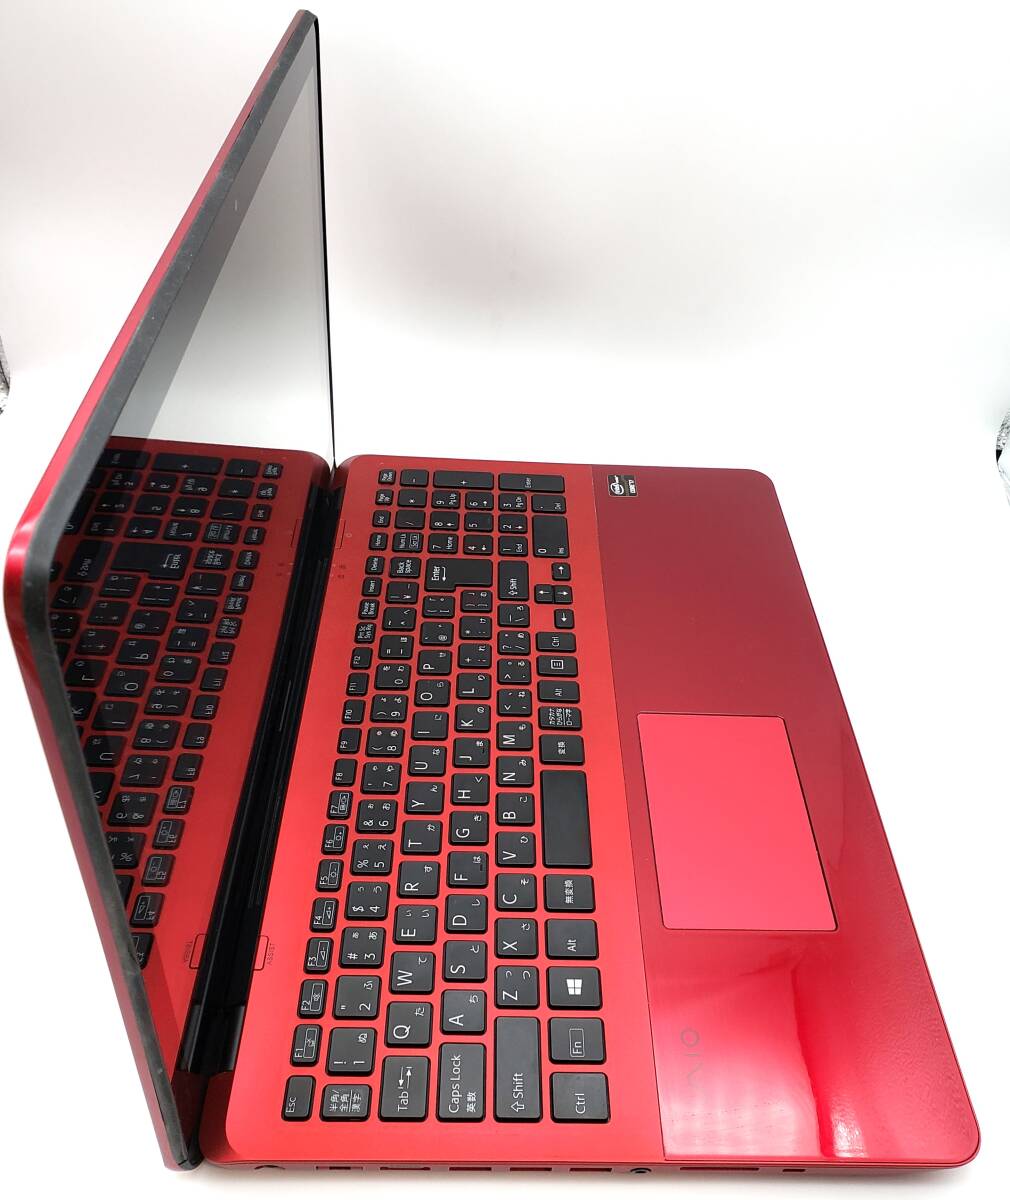 SONY VAIO Fit 15 RED EDITION Core i7-3537U/メモリ12GB/HDD1TB/GeForce GT 735M/ブルーレイ/15.6インチ フルHD液晶/Office付 SVF15A1A1J